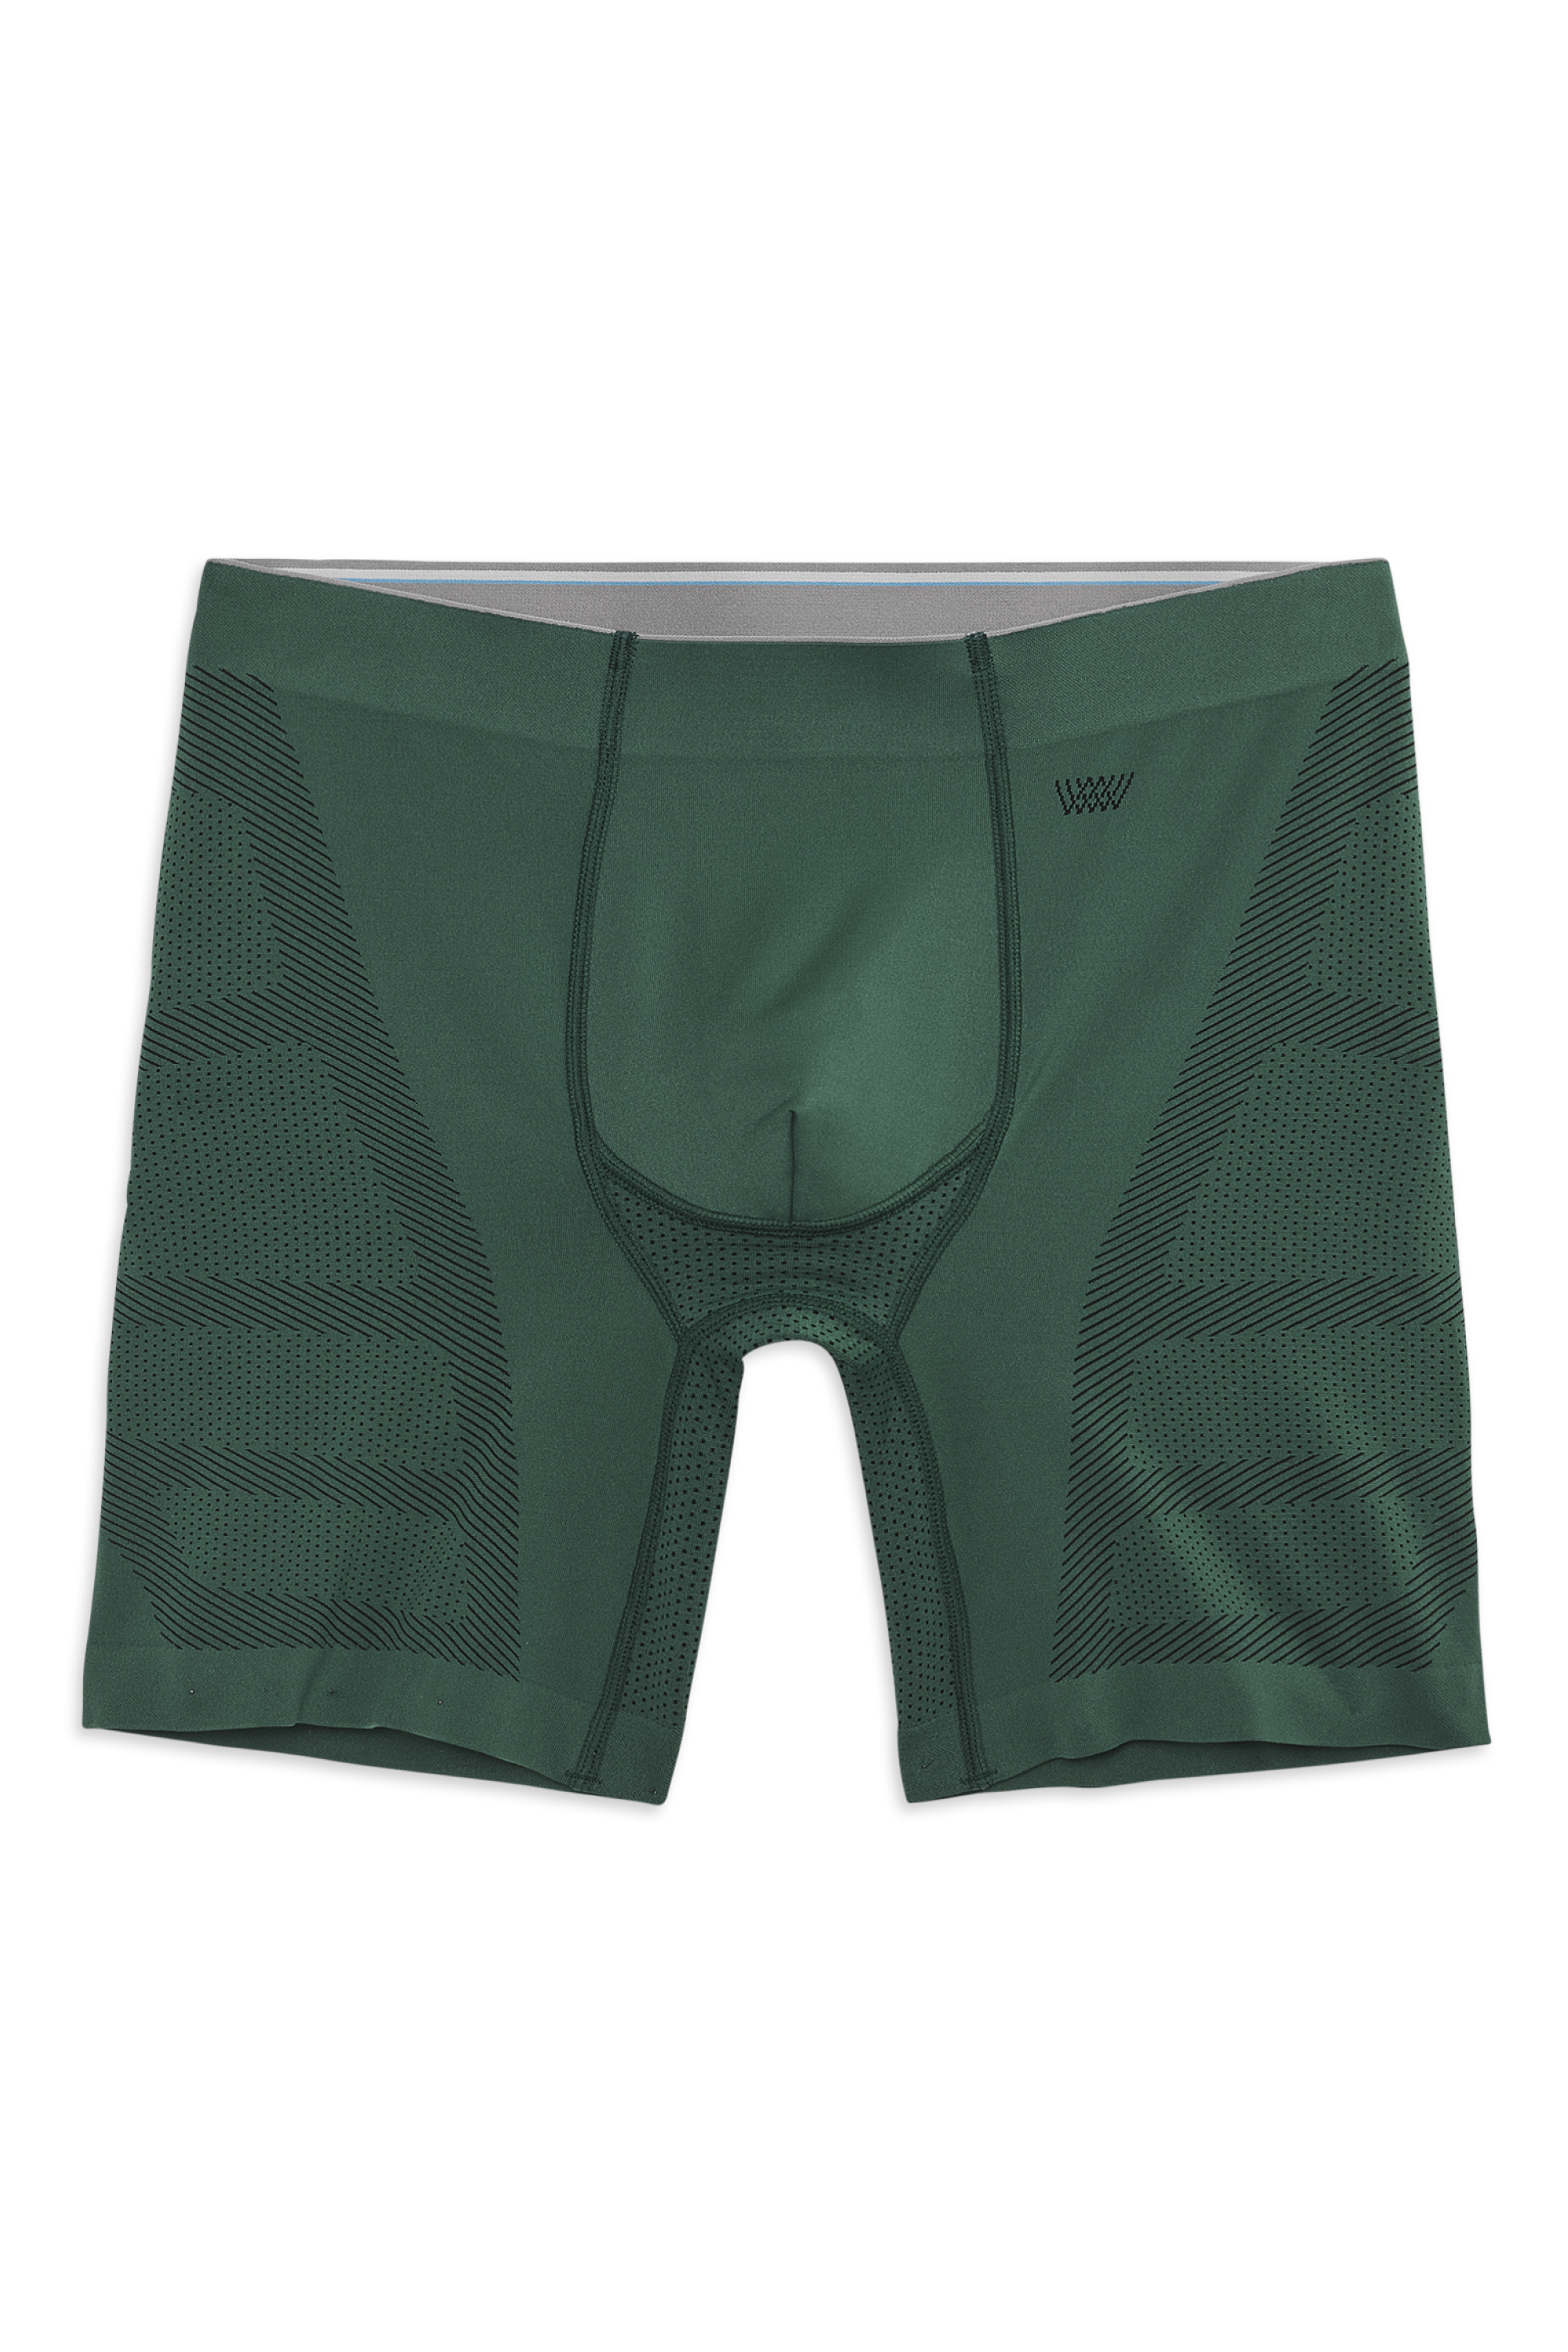 Reebok Men?s Underwear ? Long Leg Performance Boxer Briefs (6 Pack), Size  Small, Grey/Orange/Black, Grey/Orange/Black, Small : : Clothing,  Shoes & Accessories